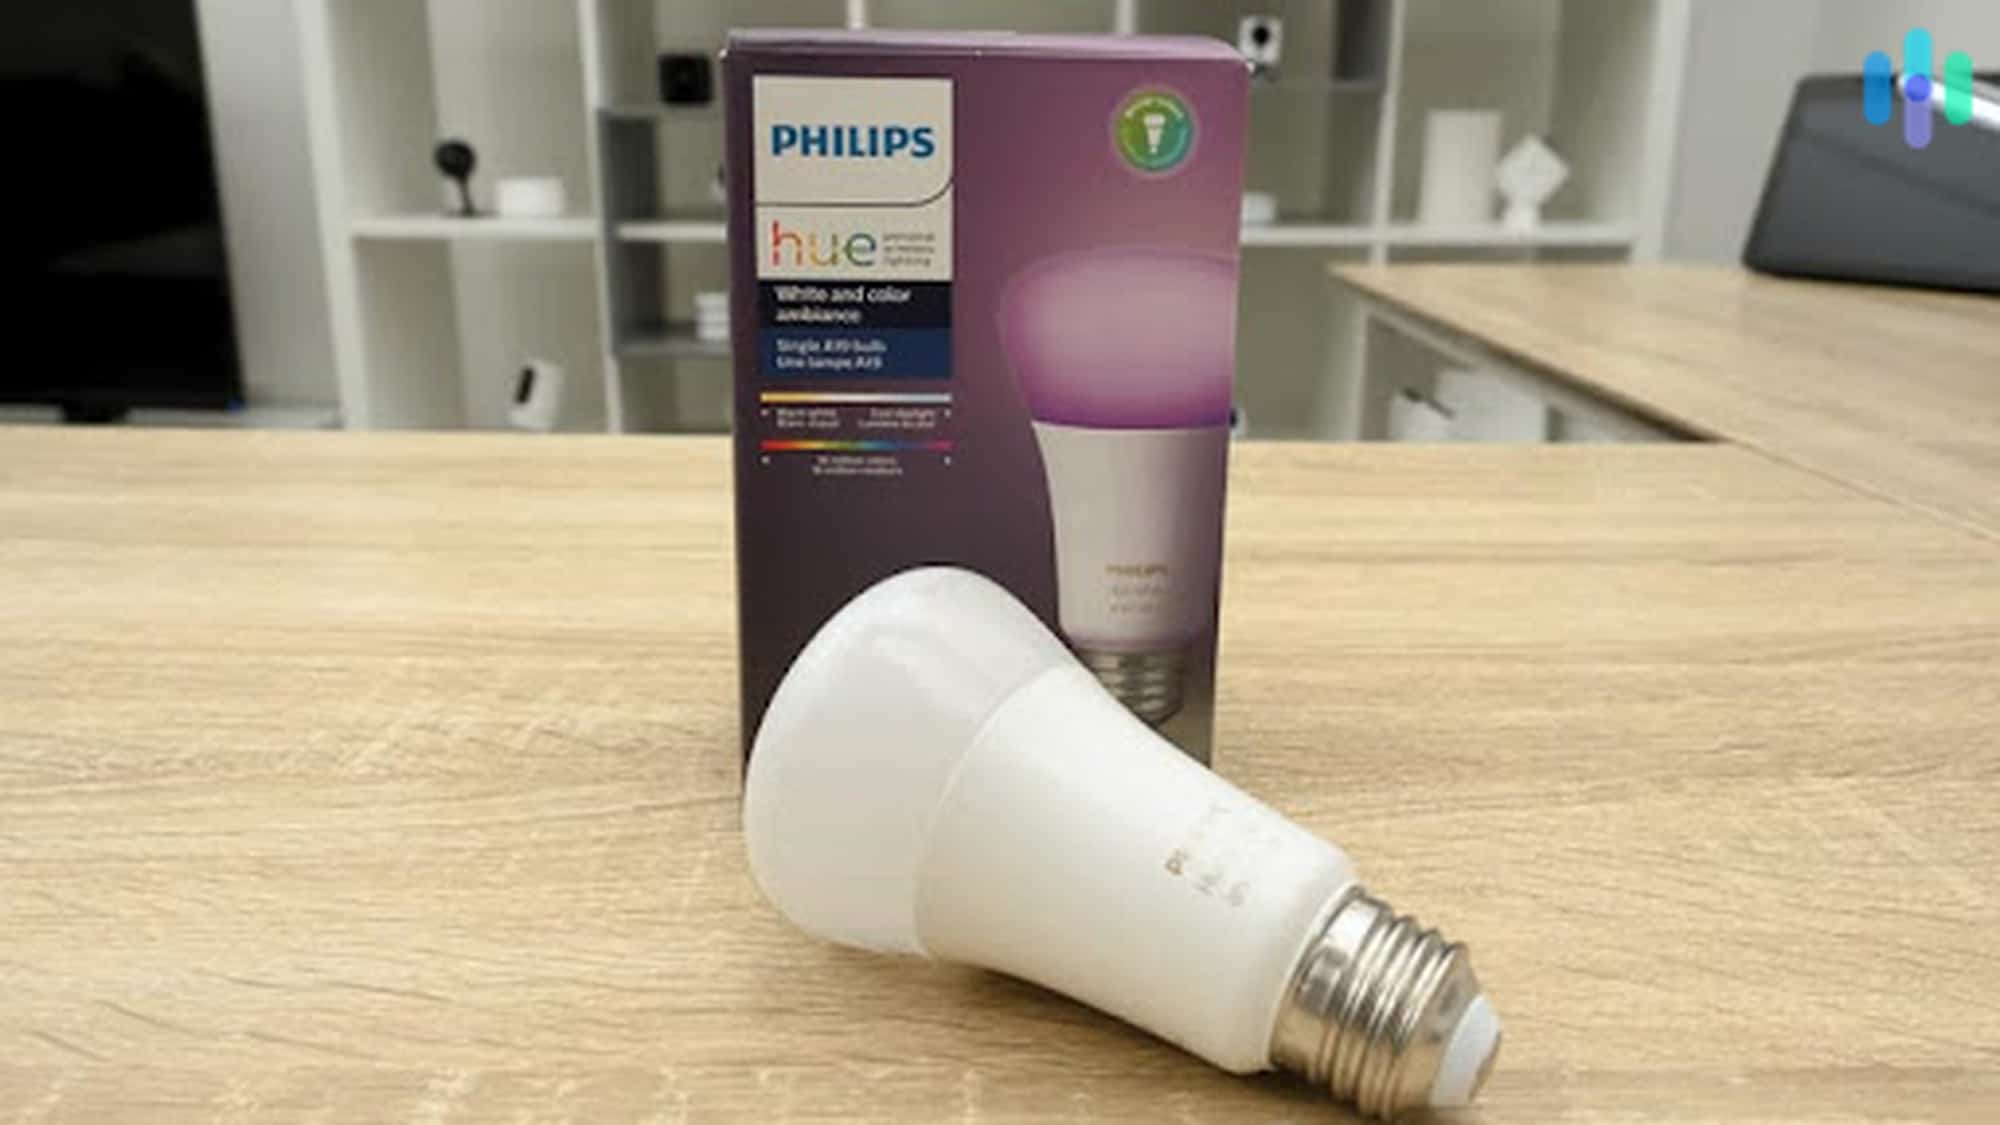 Philips Hue Bulb